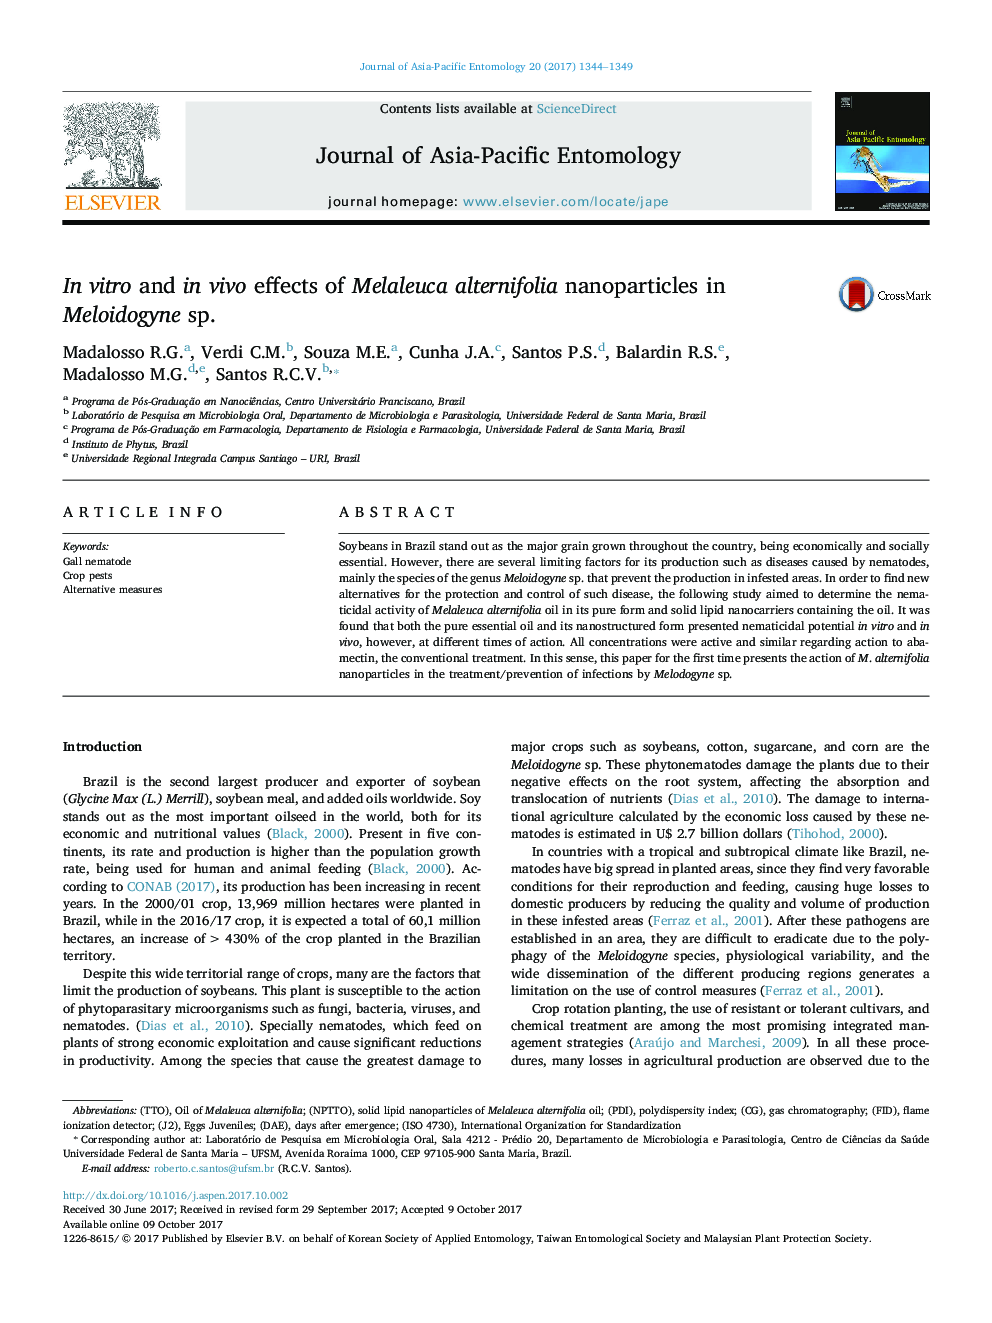 In vitro and in vivo effects of Melaleuca alternifolia nanoparticles in Meloidogyne sp.